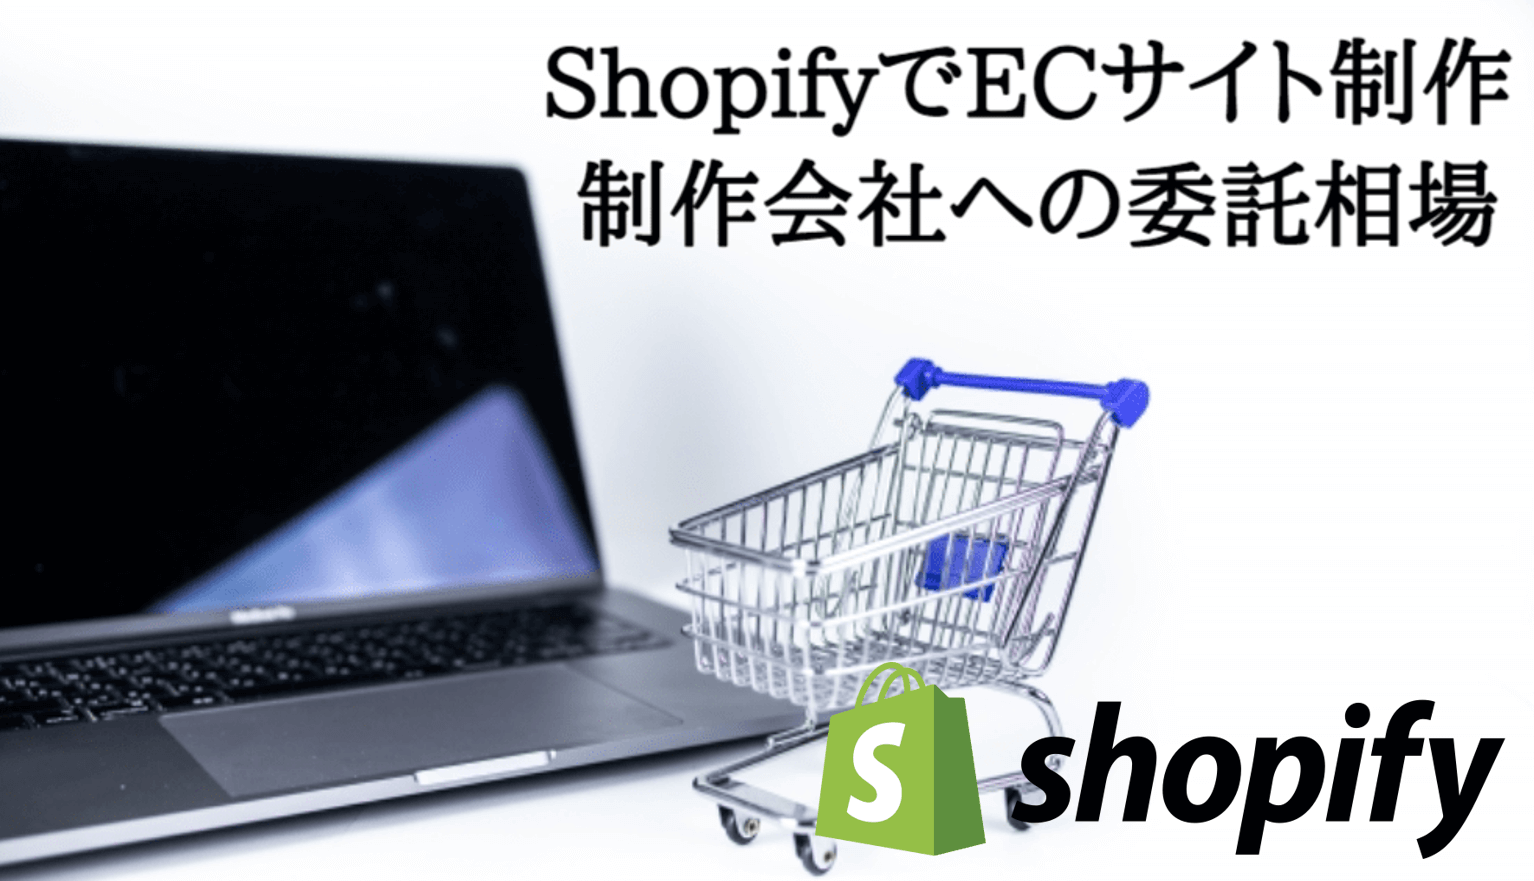 ShopifyでECサイト制作委託をした場合の 相場価格